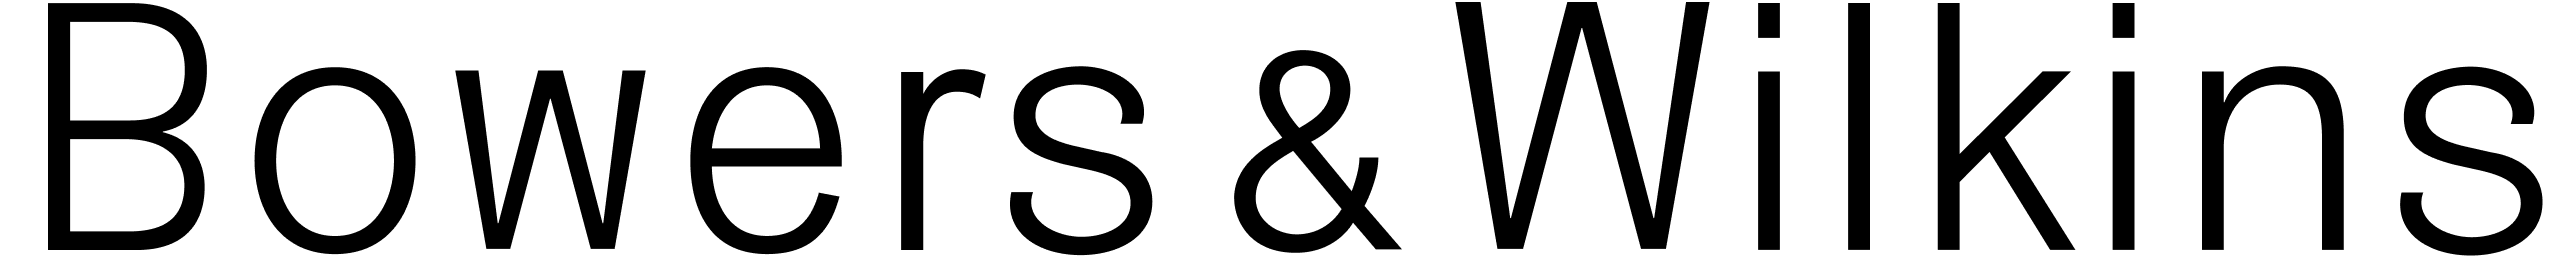 bw-logo-dark